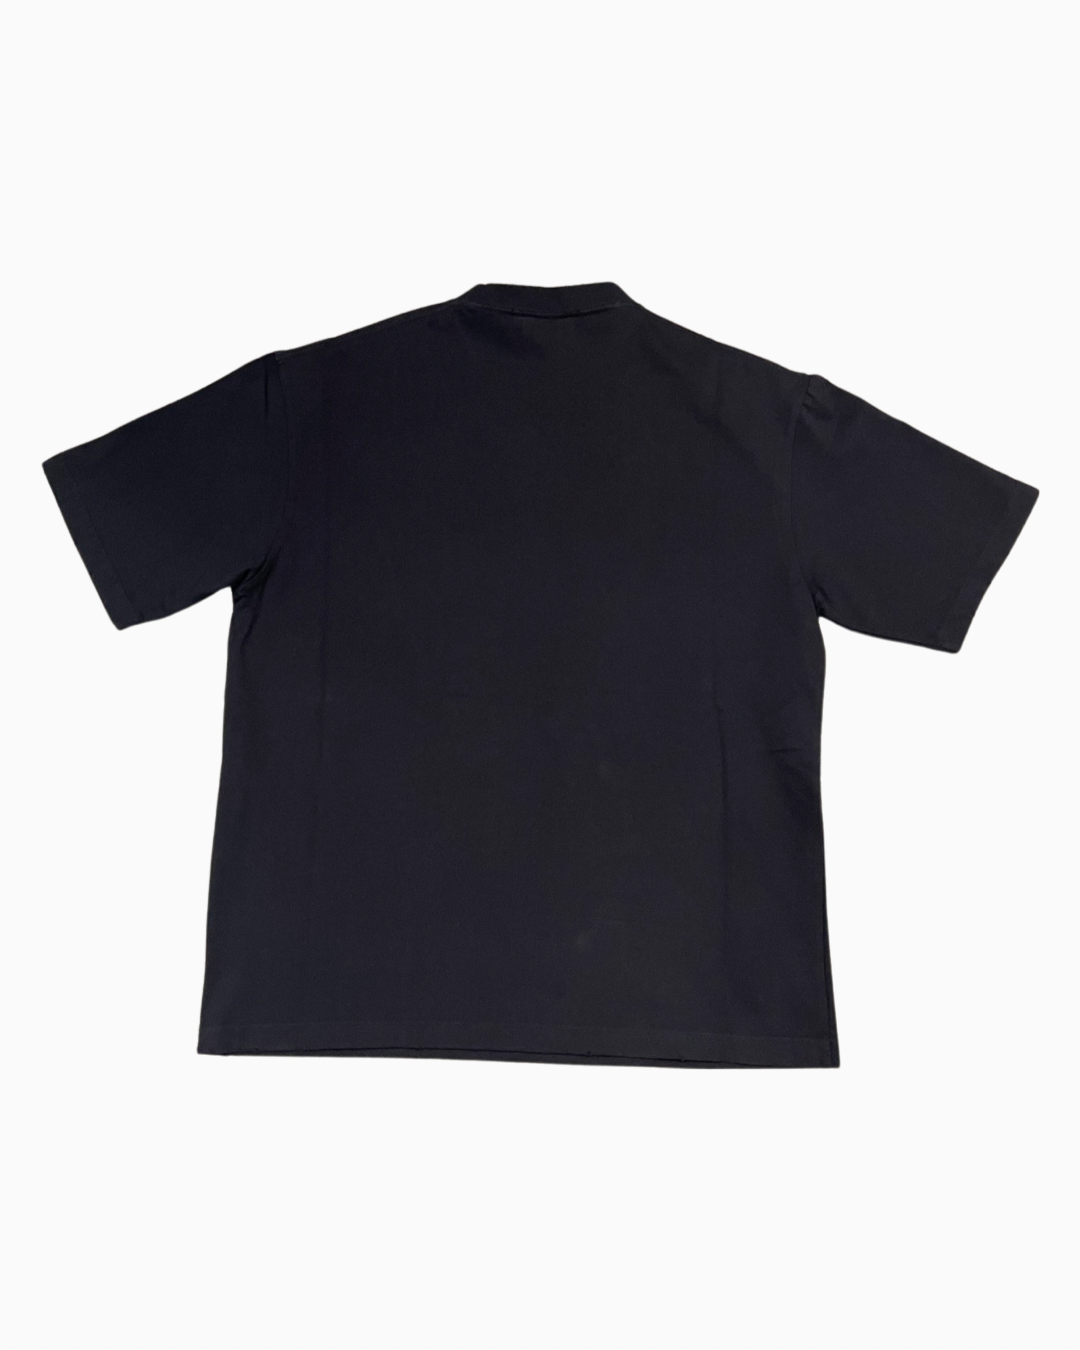 distressed-effect cotton T-shirt, Balenciaga